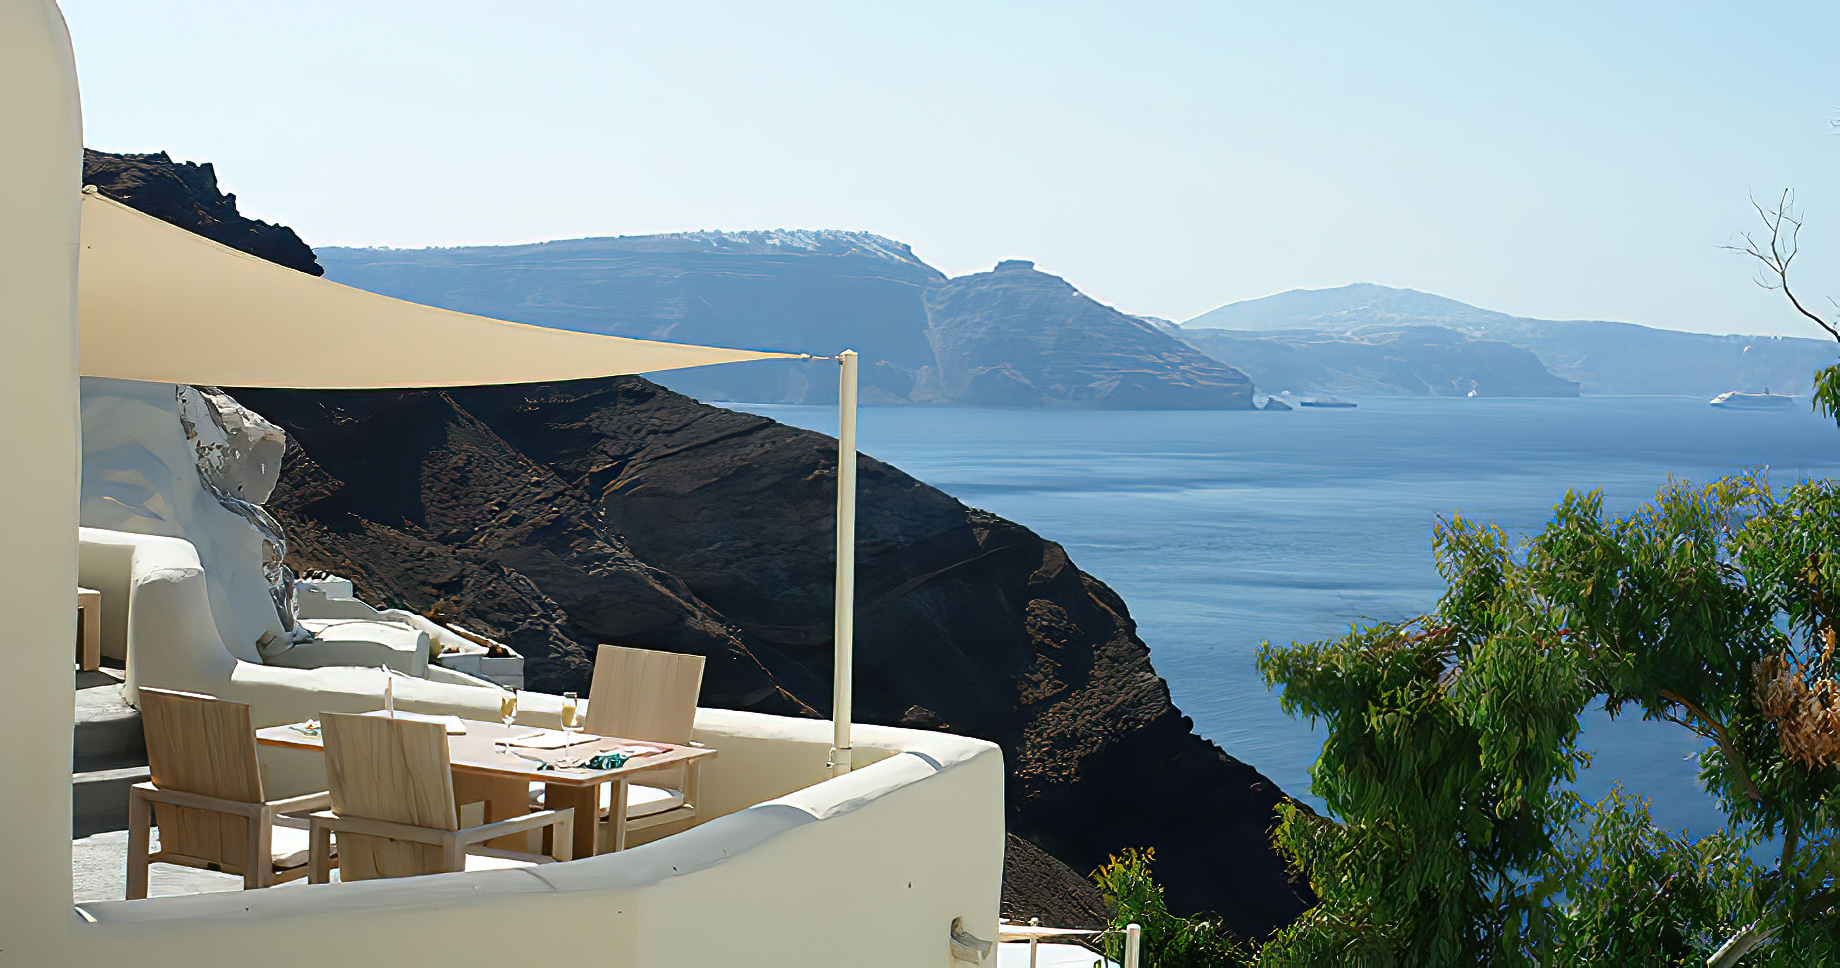 Mystique Hotel Santorini – Oia, Santorini Island, Greece – Ocean View Patio Deck